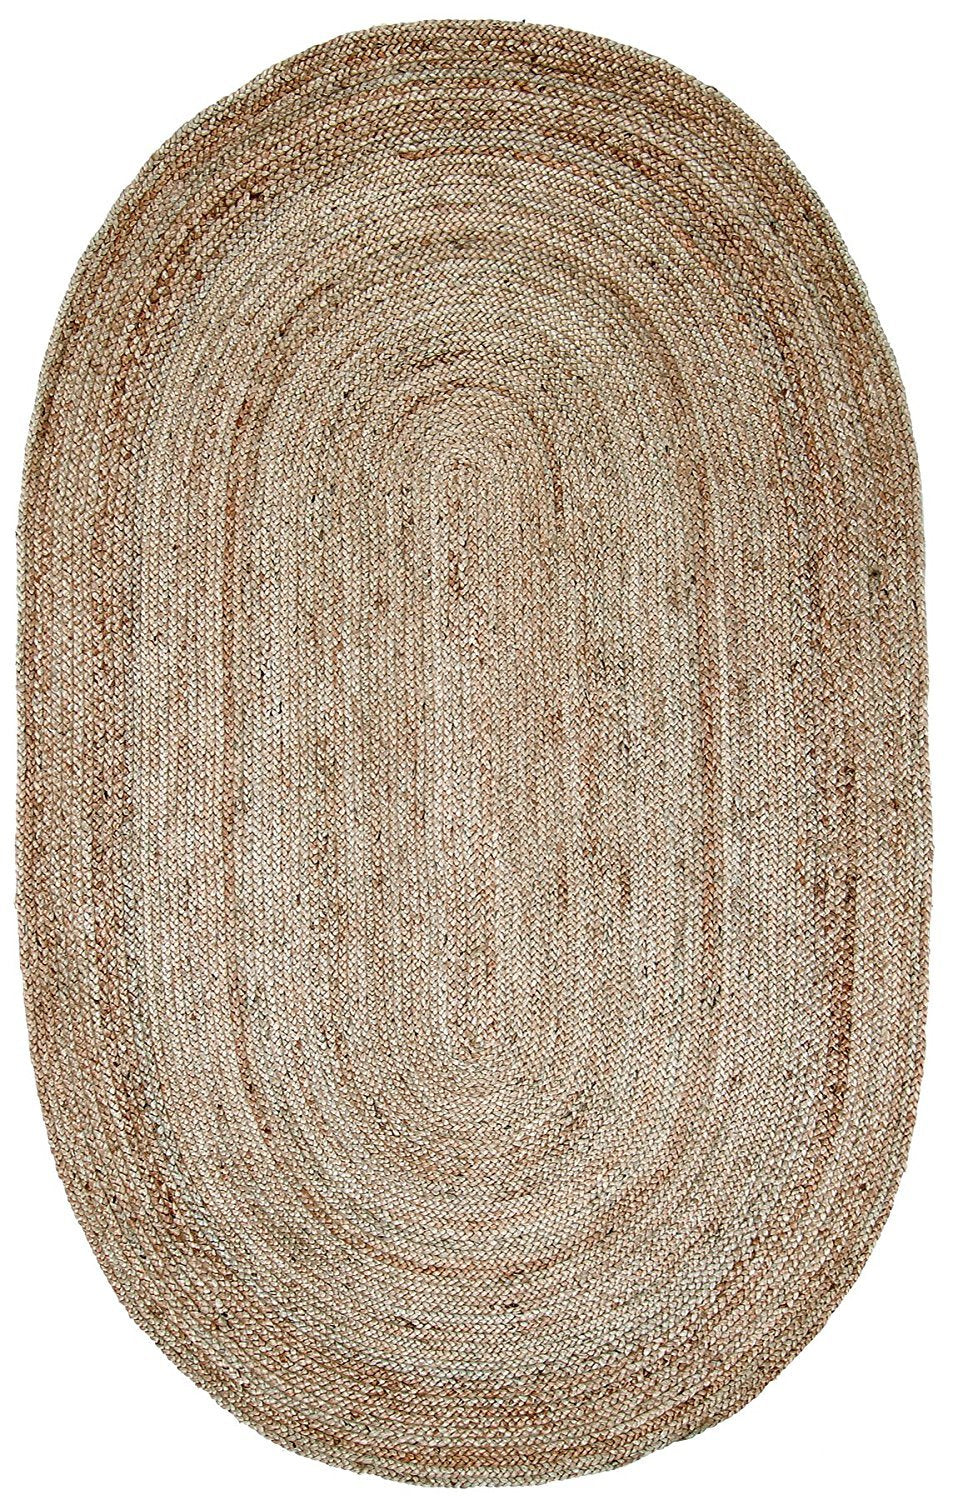 Handmade Braided Natural Jute Area Rugs